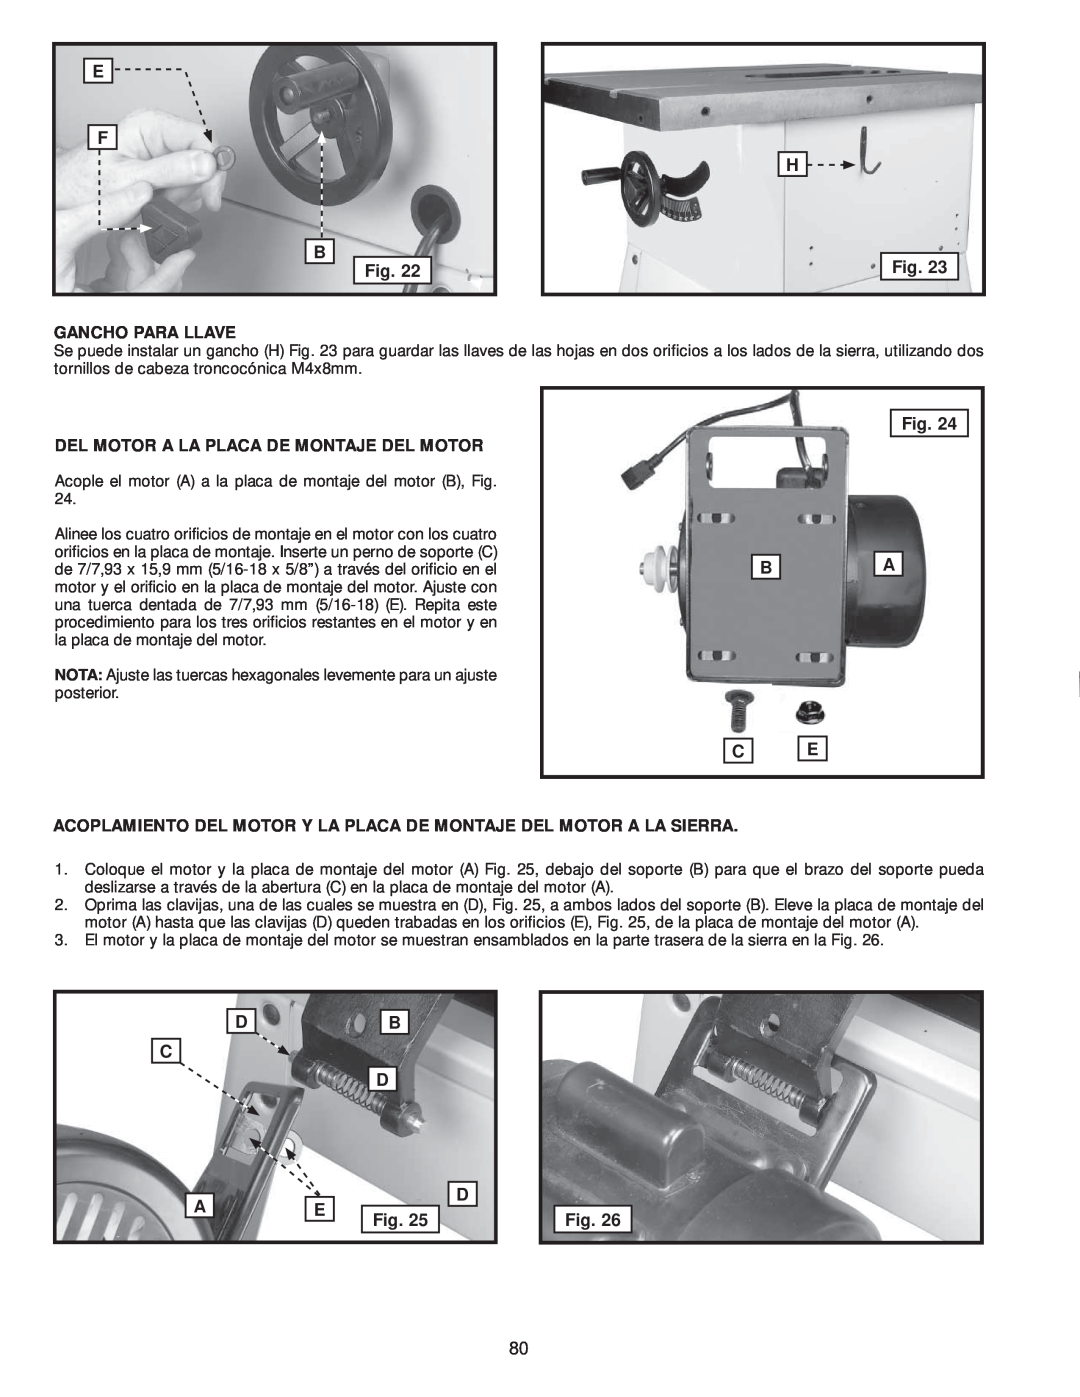 Delta 36-979, 36-978 instruction manual Acople el motor A a la placa de montaje del motor B, Fig 